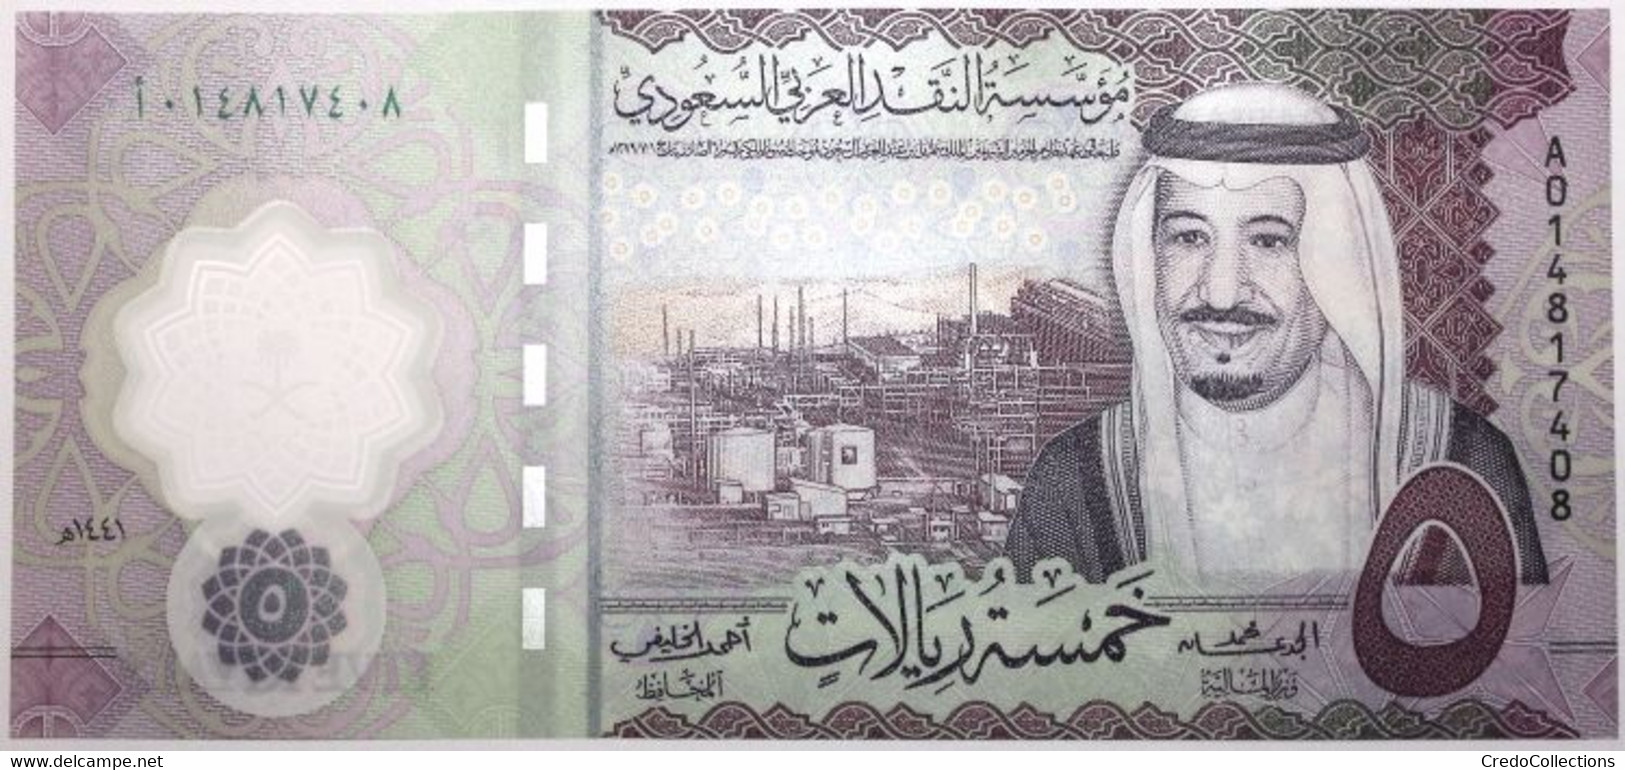 Arabie Saoudite - 5 Riyal - 2020 - PICK 43a - NEUF - Arabie Saoudite